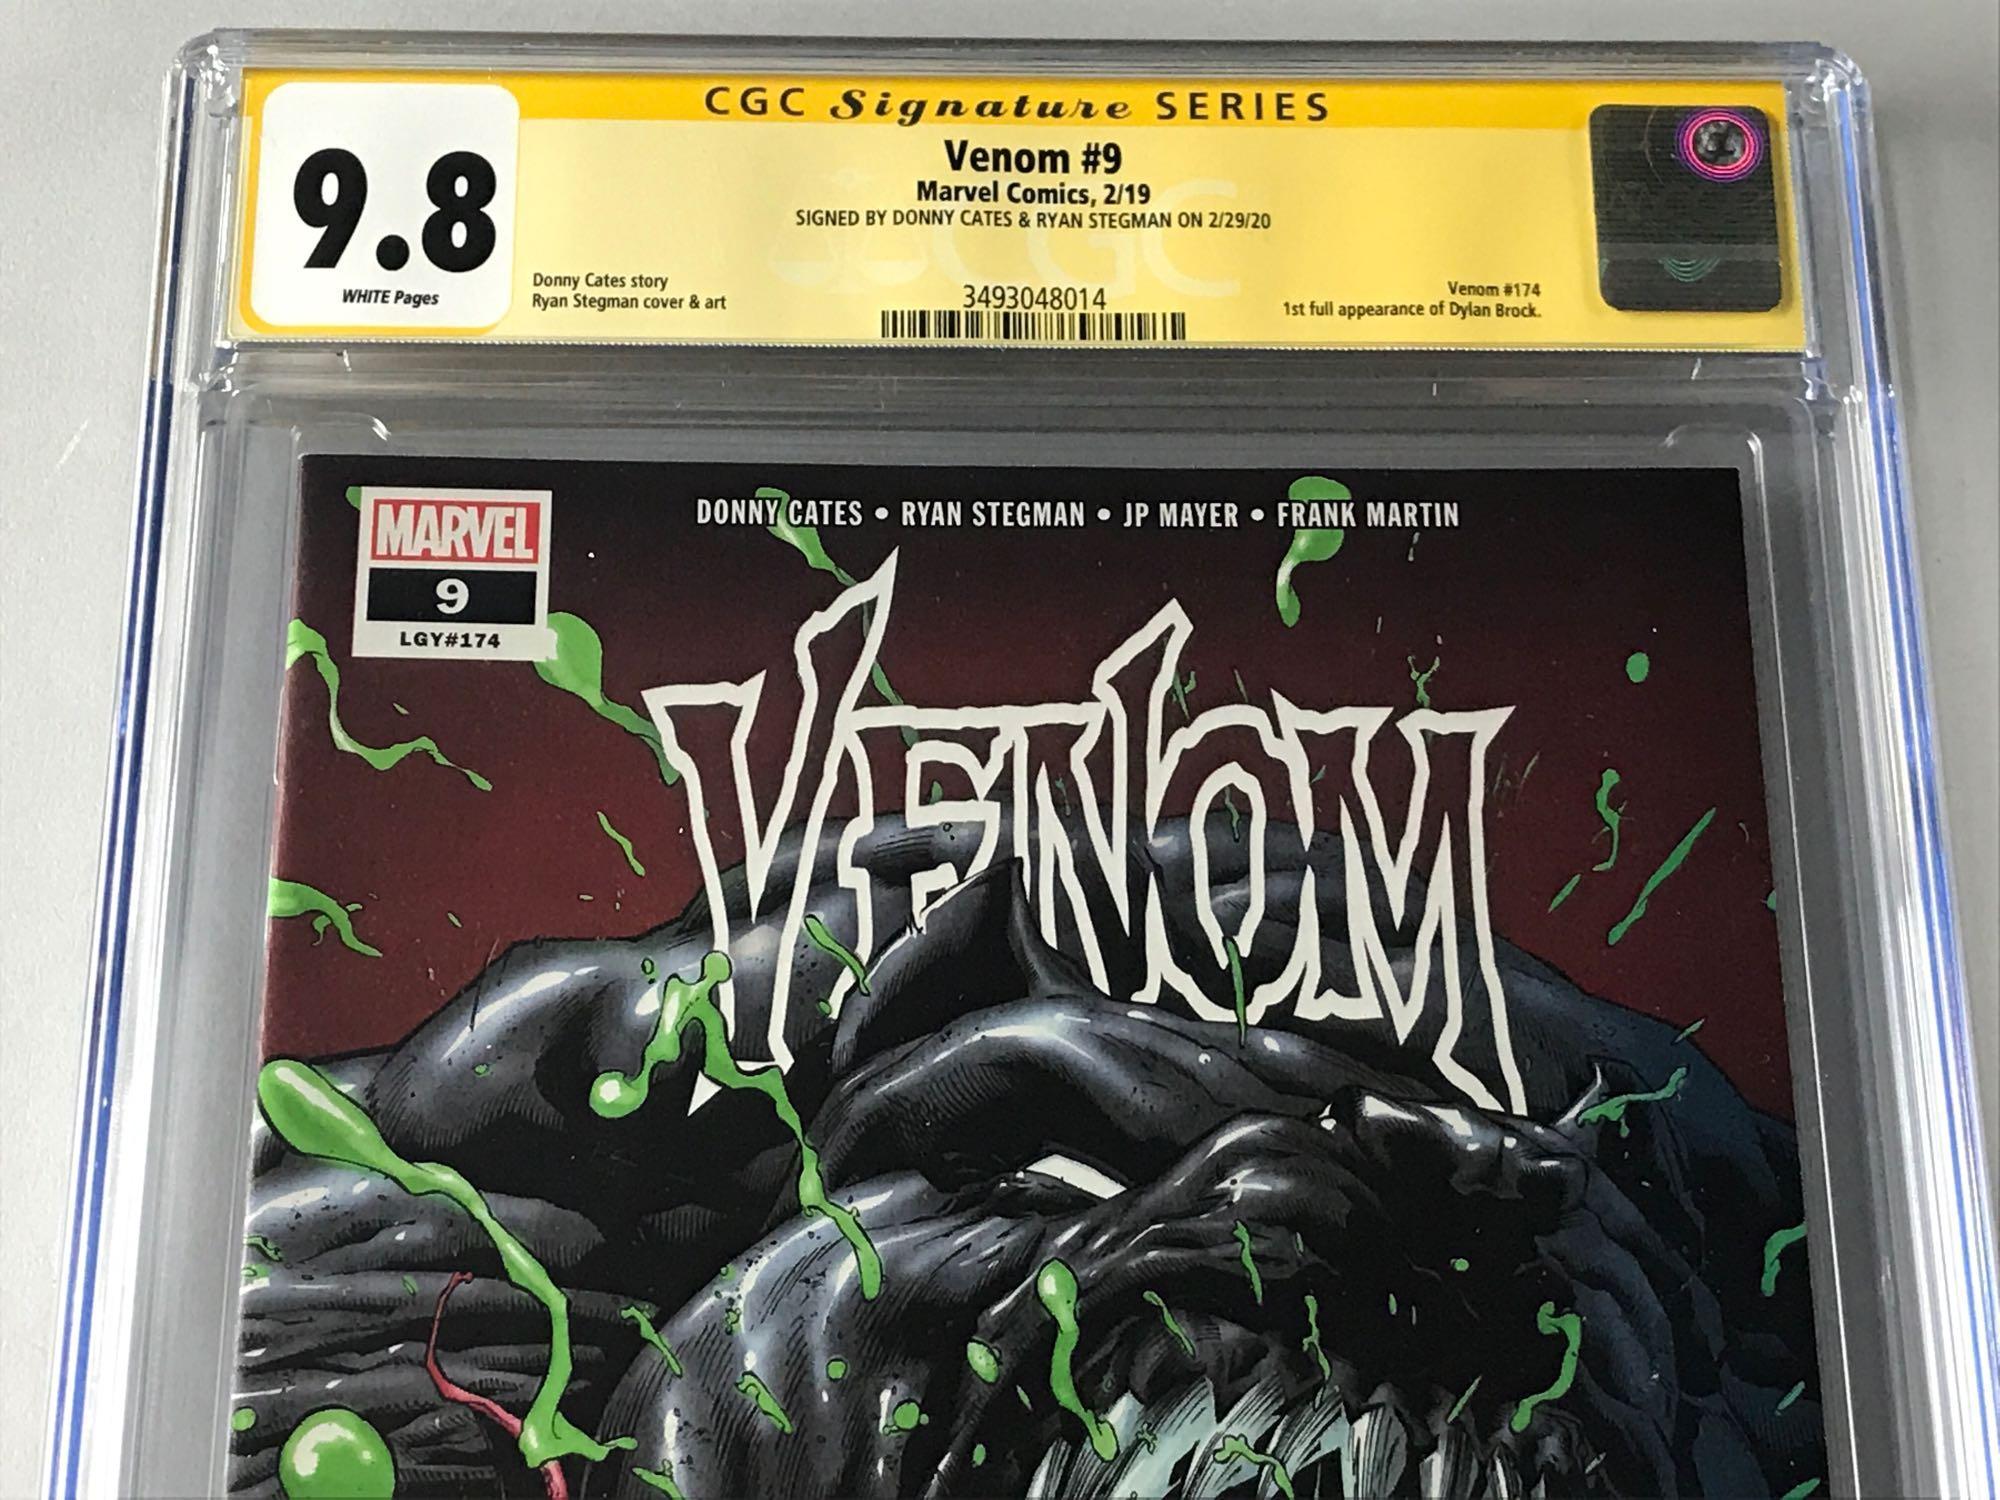 Signed CGC Graded Marvel Comics Venom No. 9 comic book